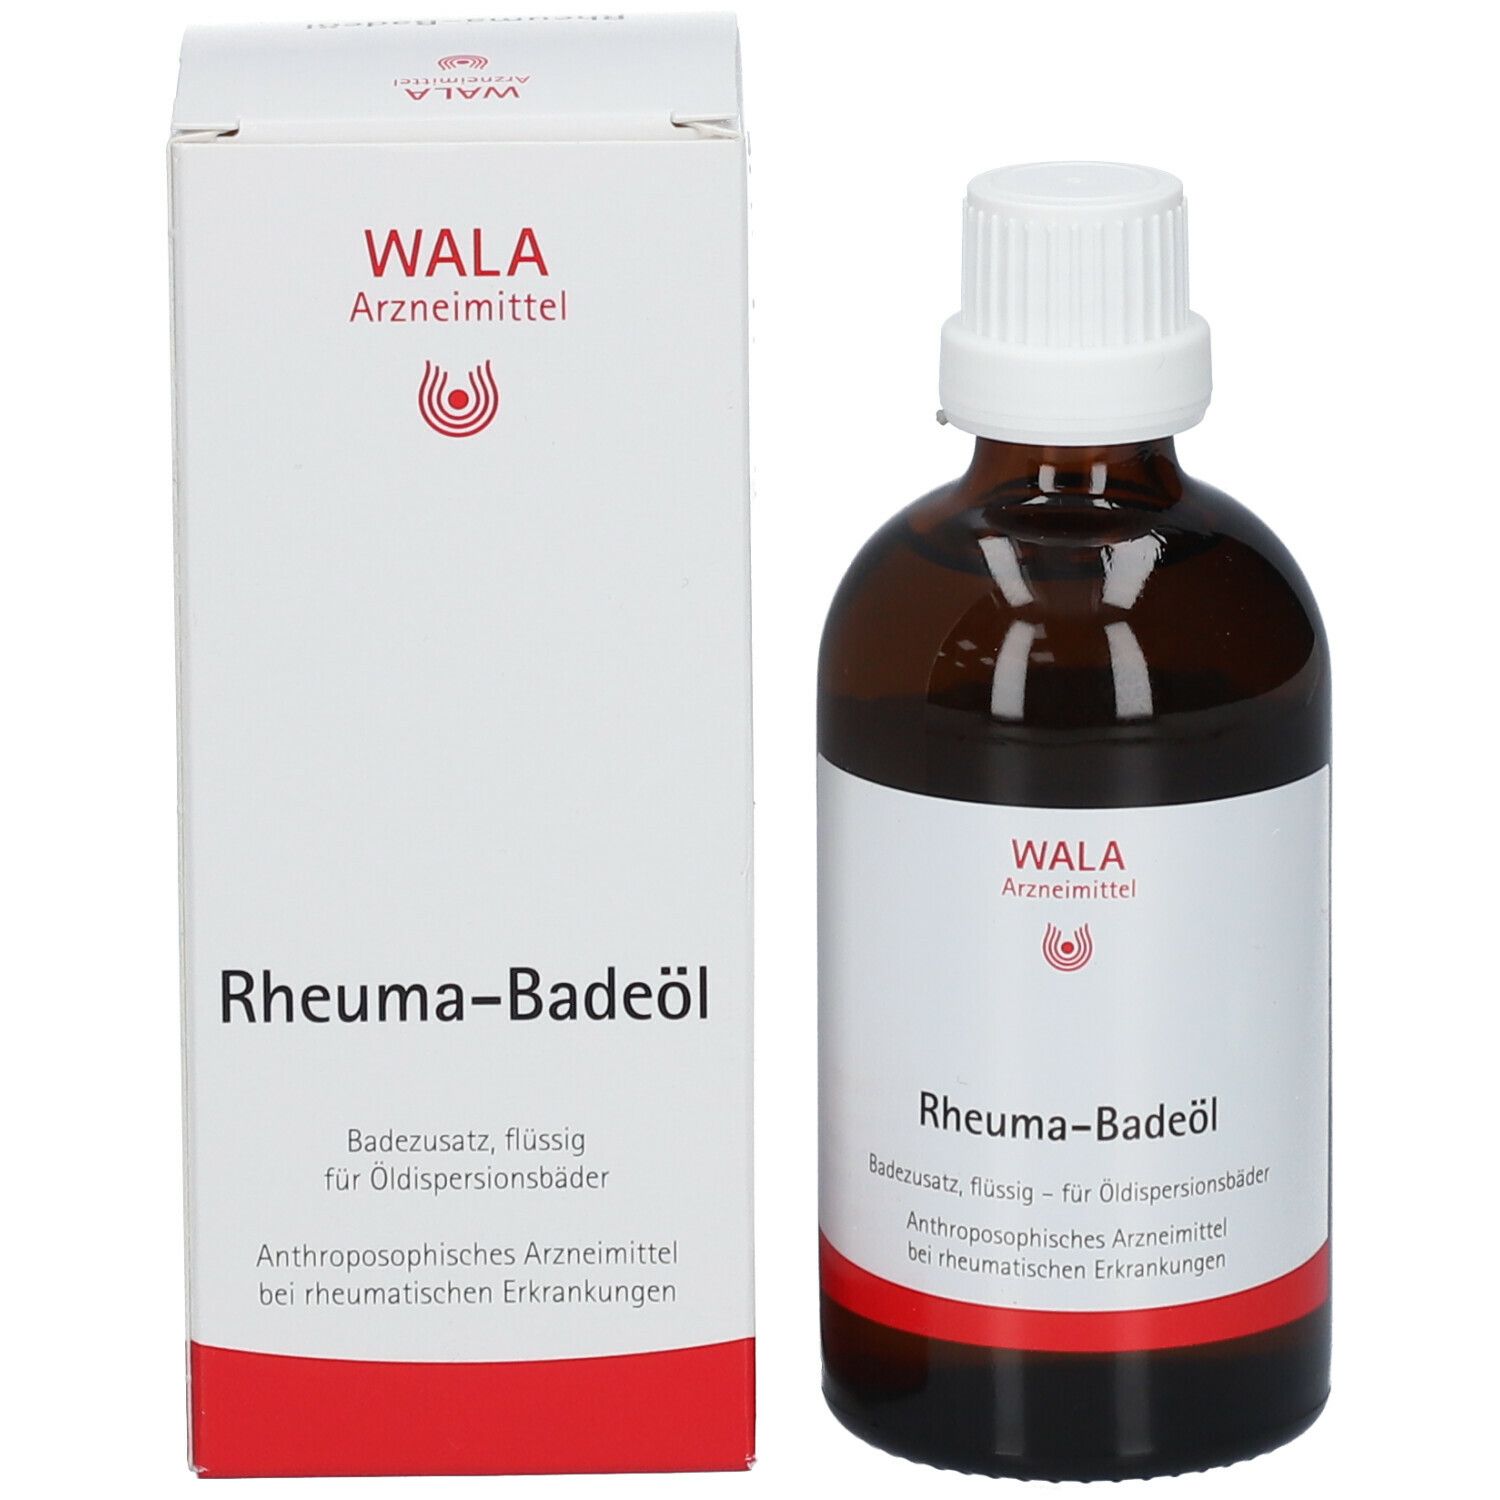 WALA® Rheuma-Badeöl